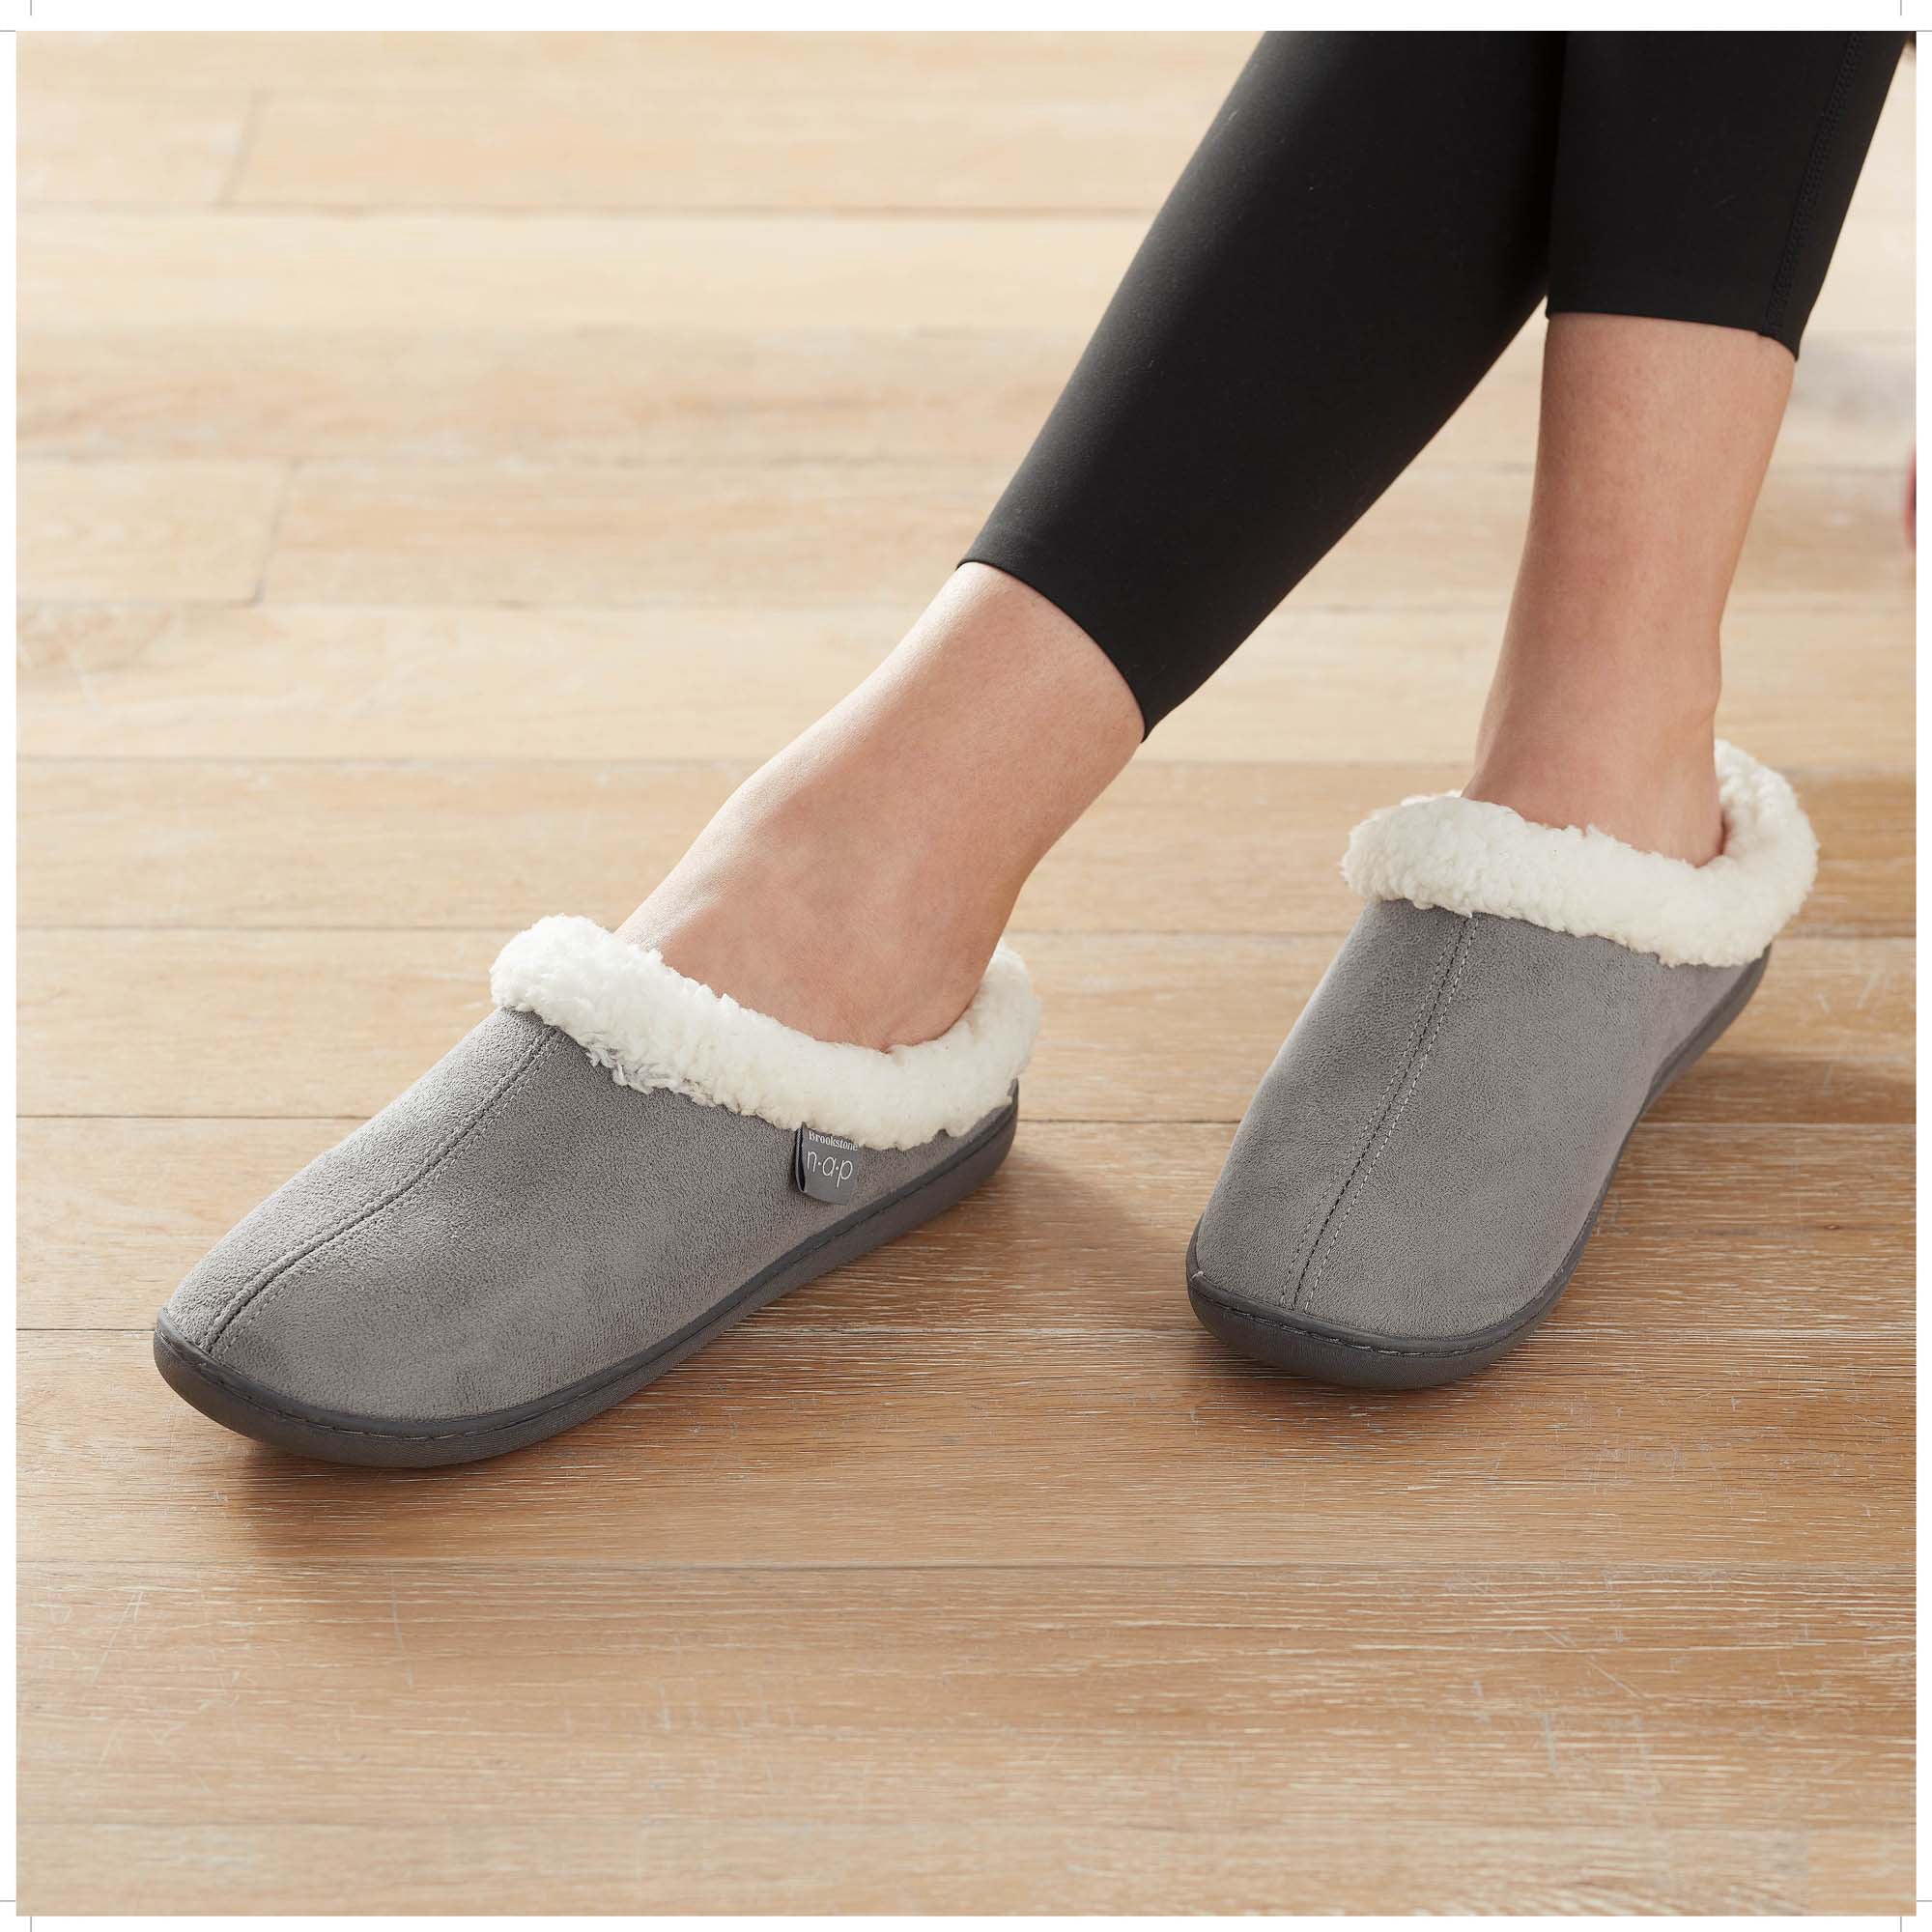 brookstone memory foam slippers